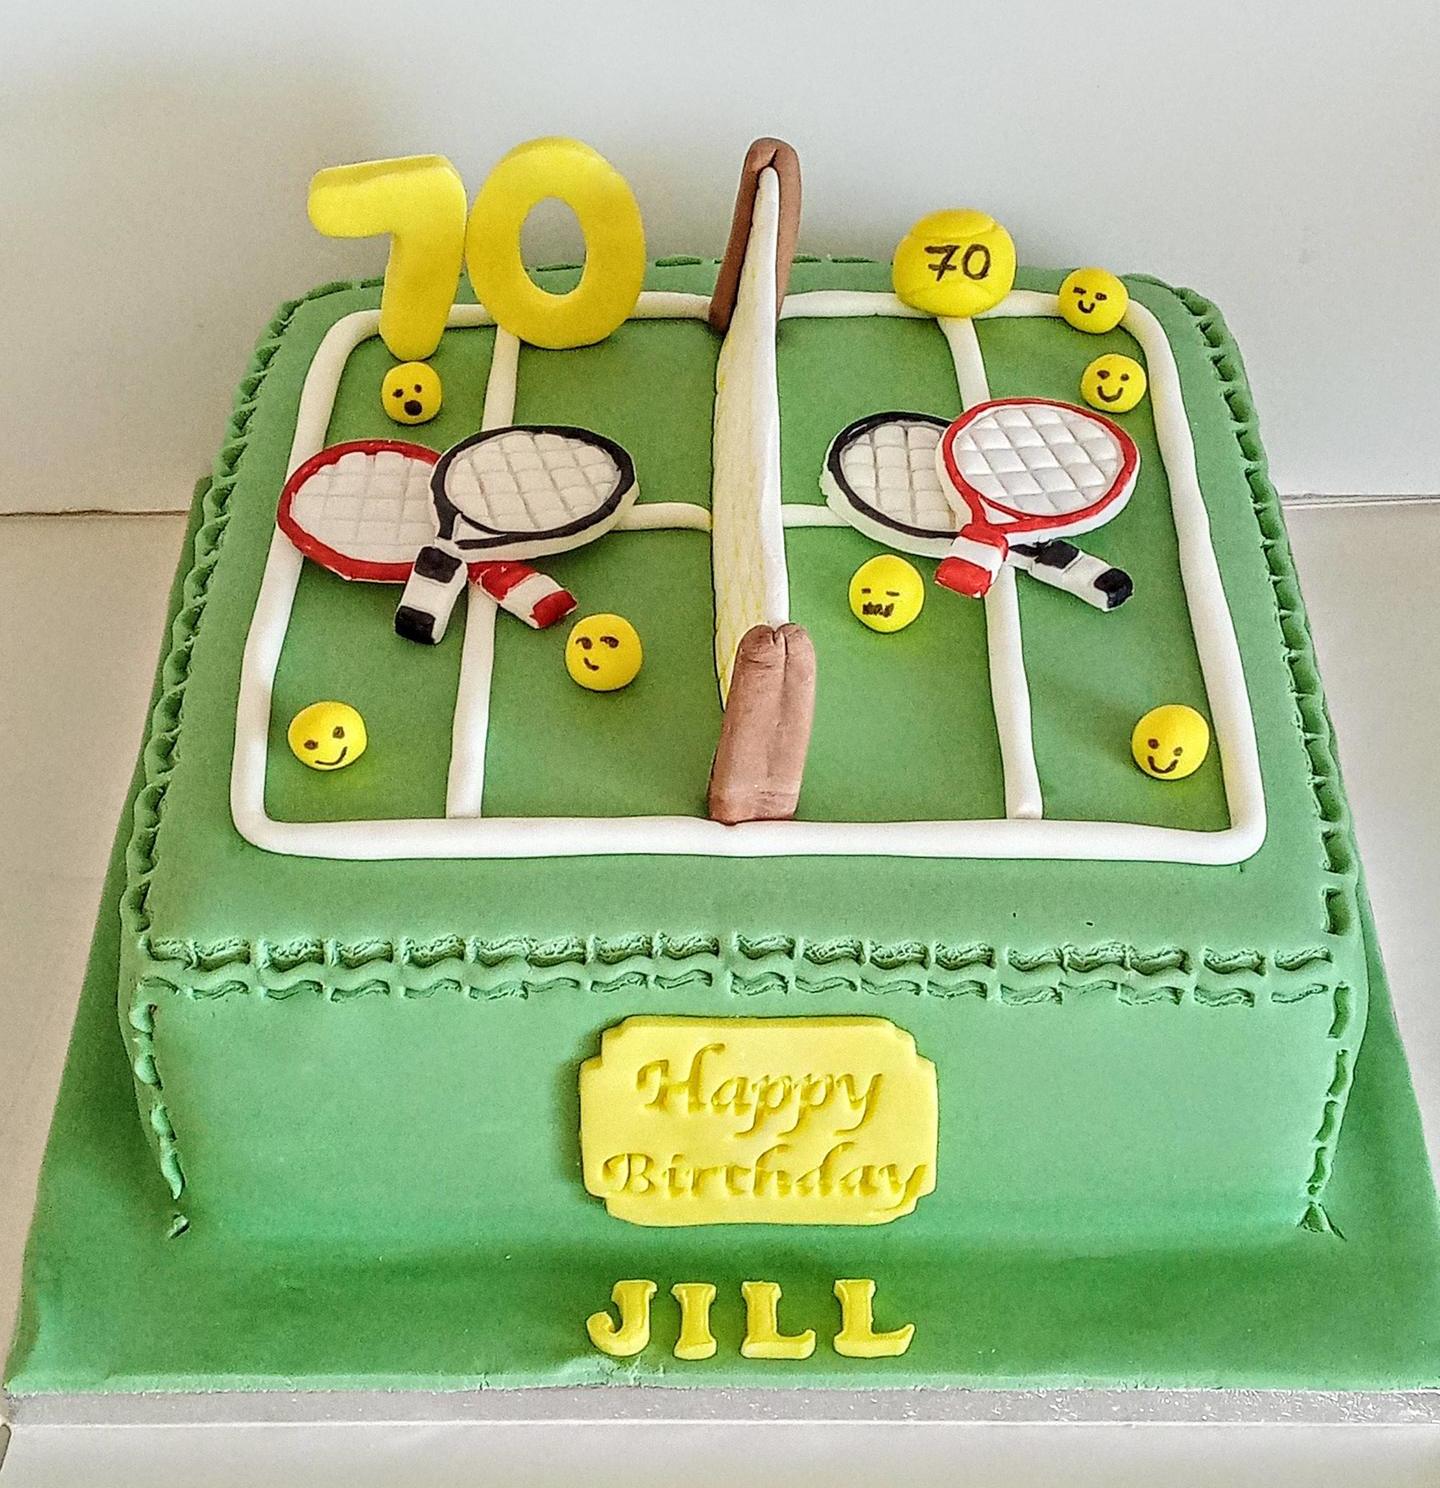 Ladies Tennis themed birthday cake